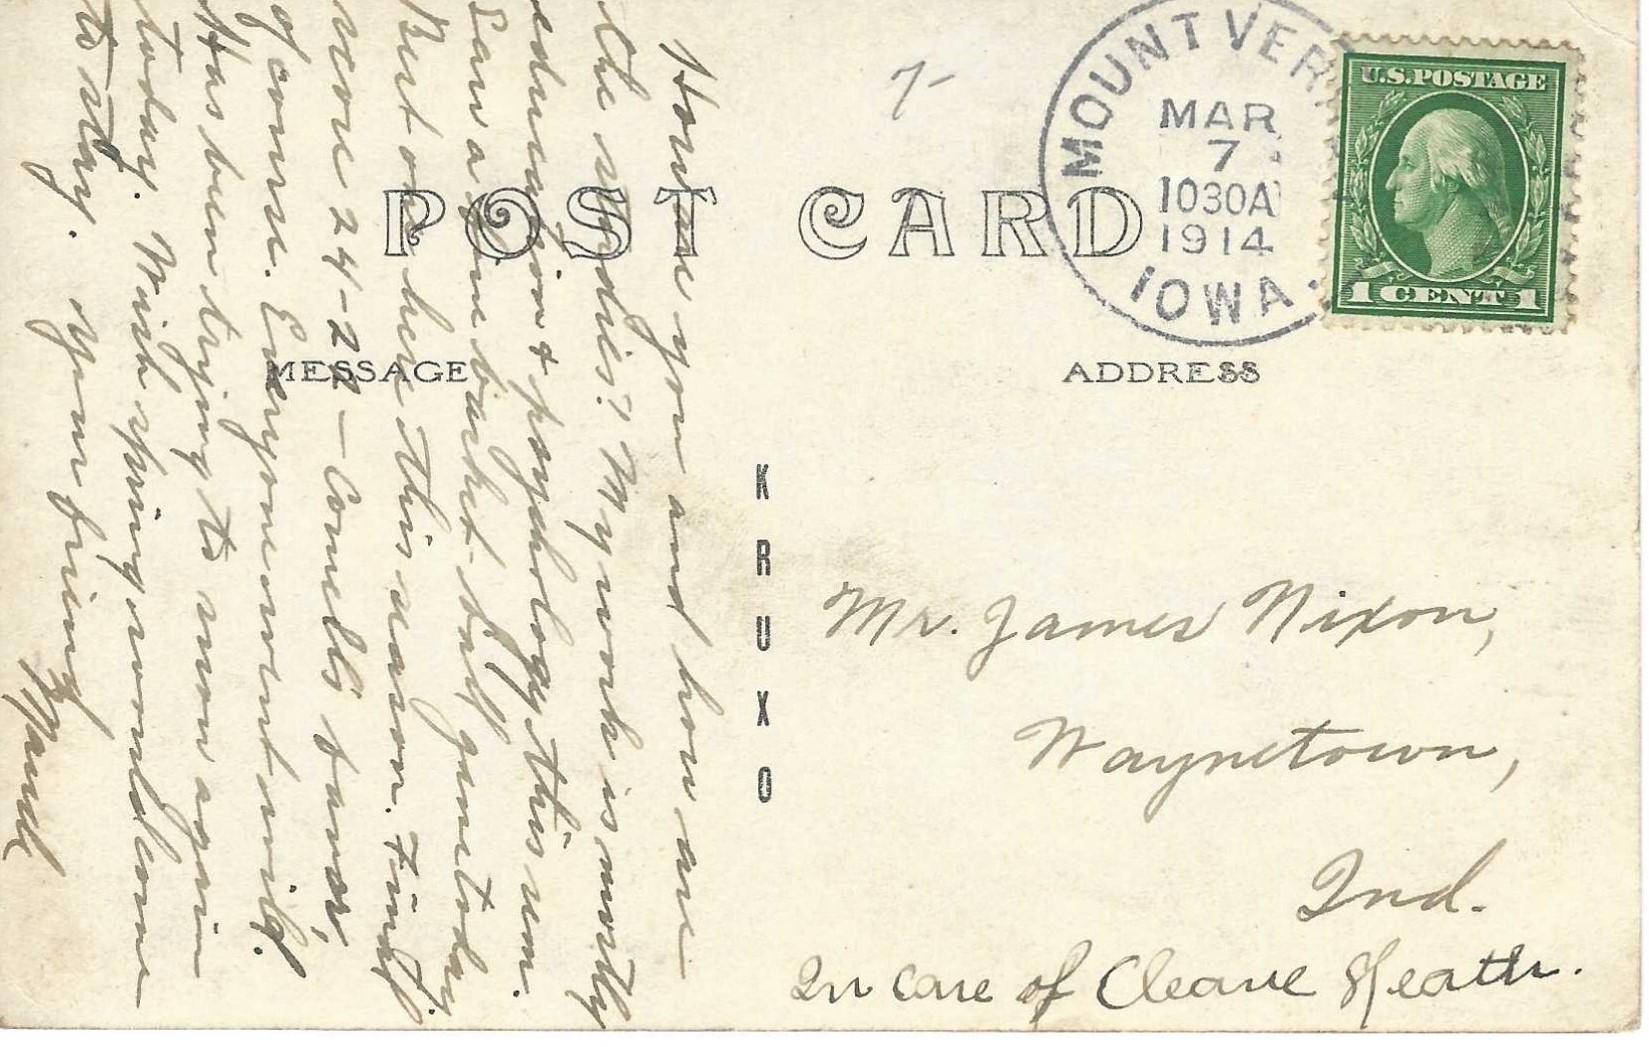 Postcard addressed to Mr. James Nixon